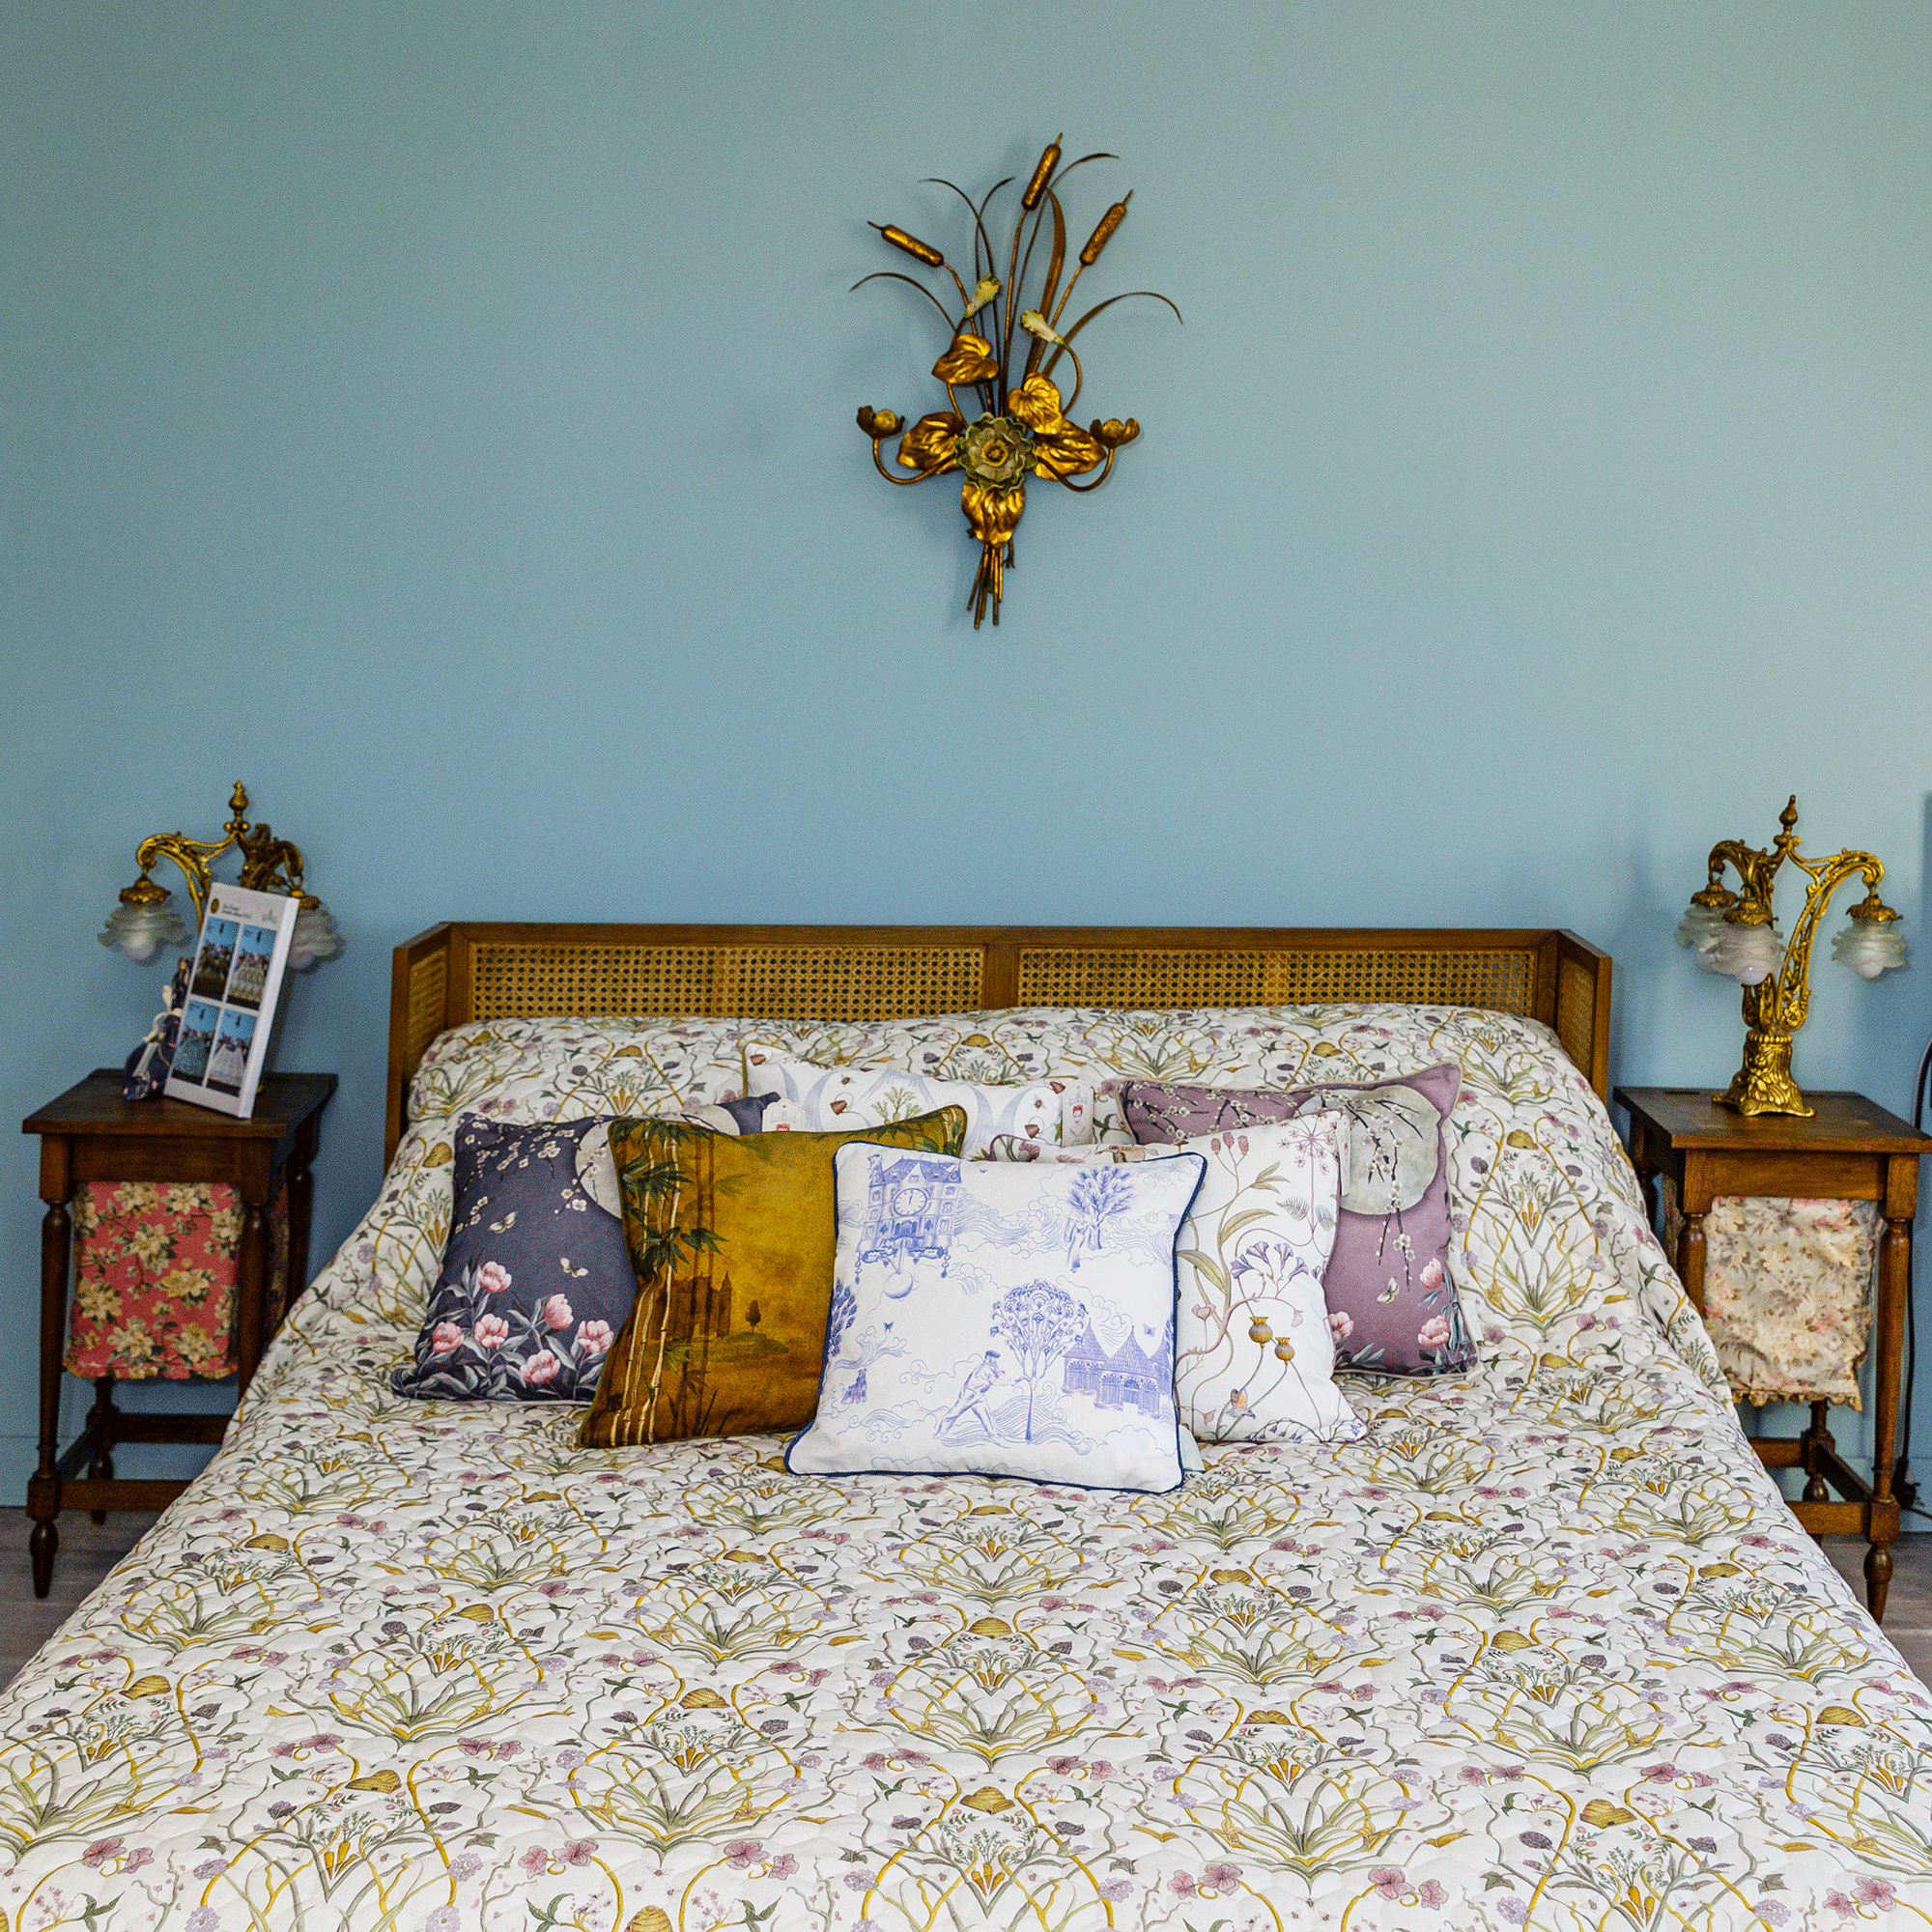 Blue bedroom with rattan headboard